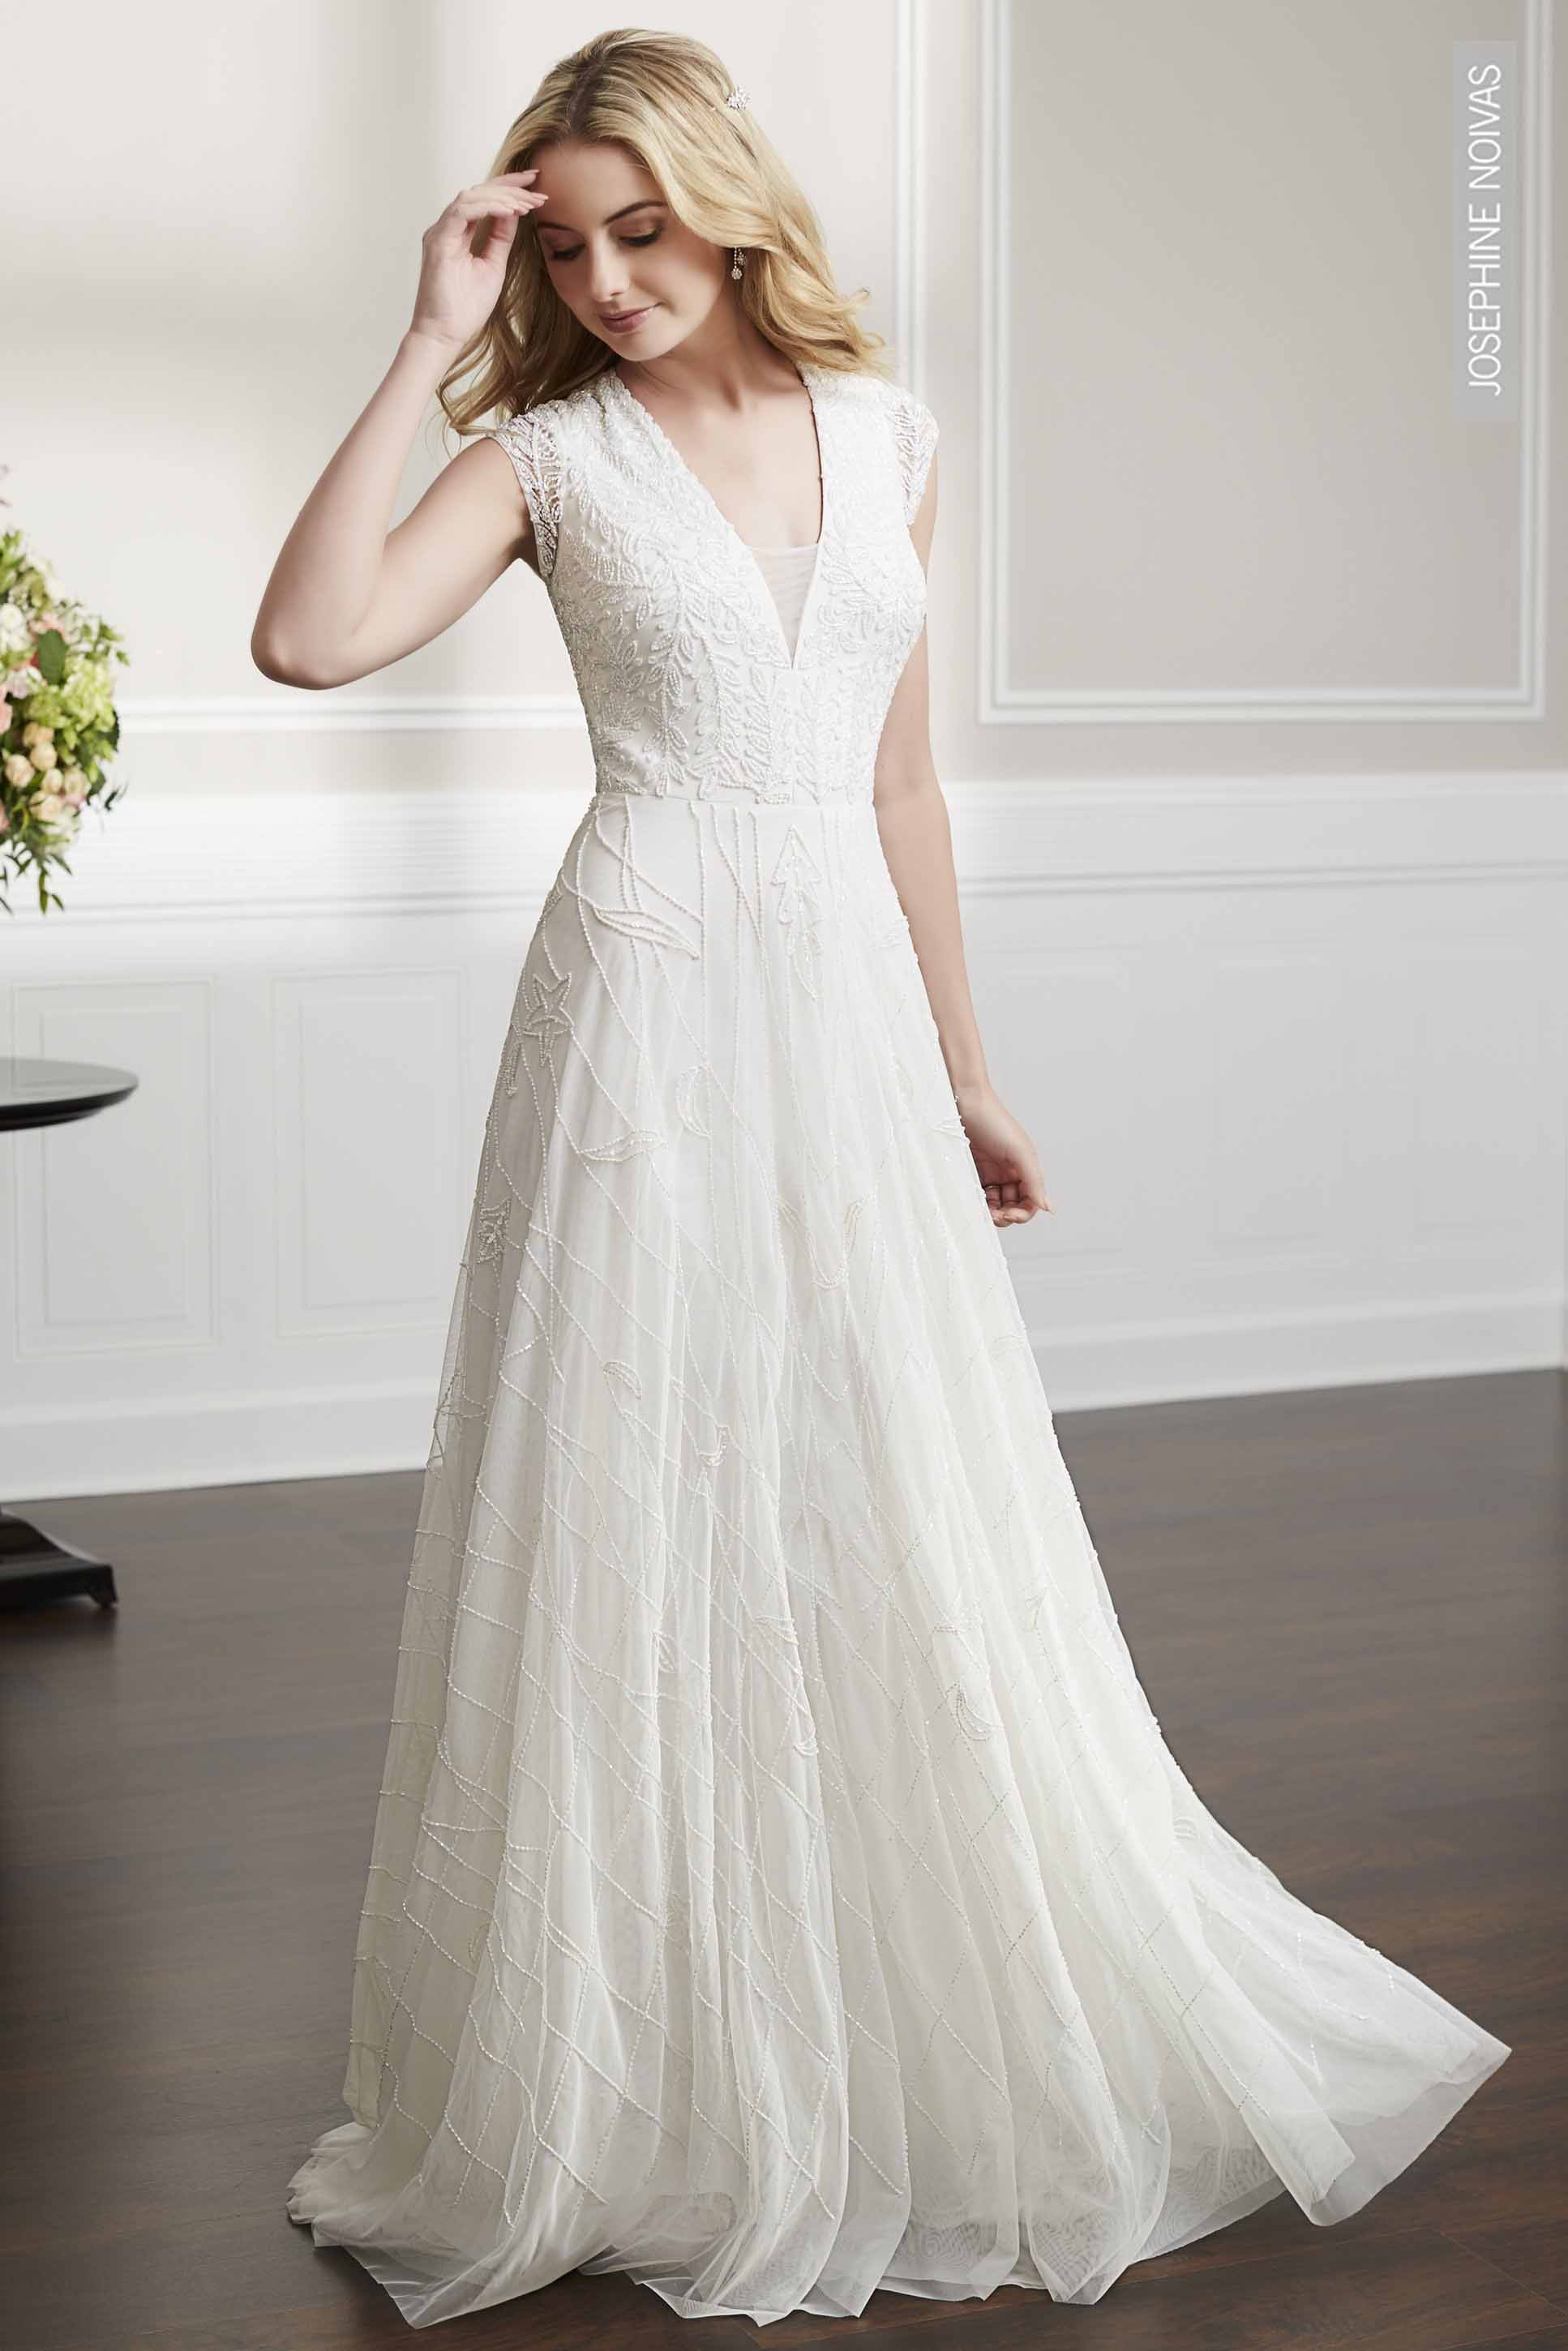 Vestido de noiva simples 20 modelos elegantes para usar